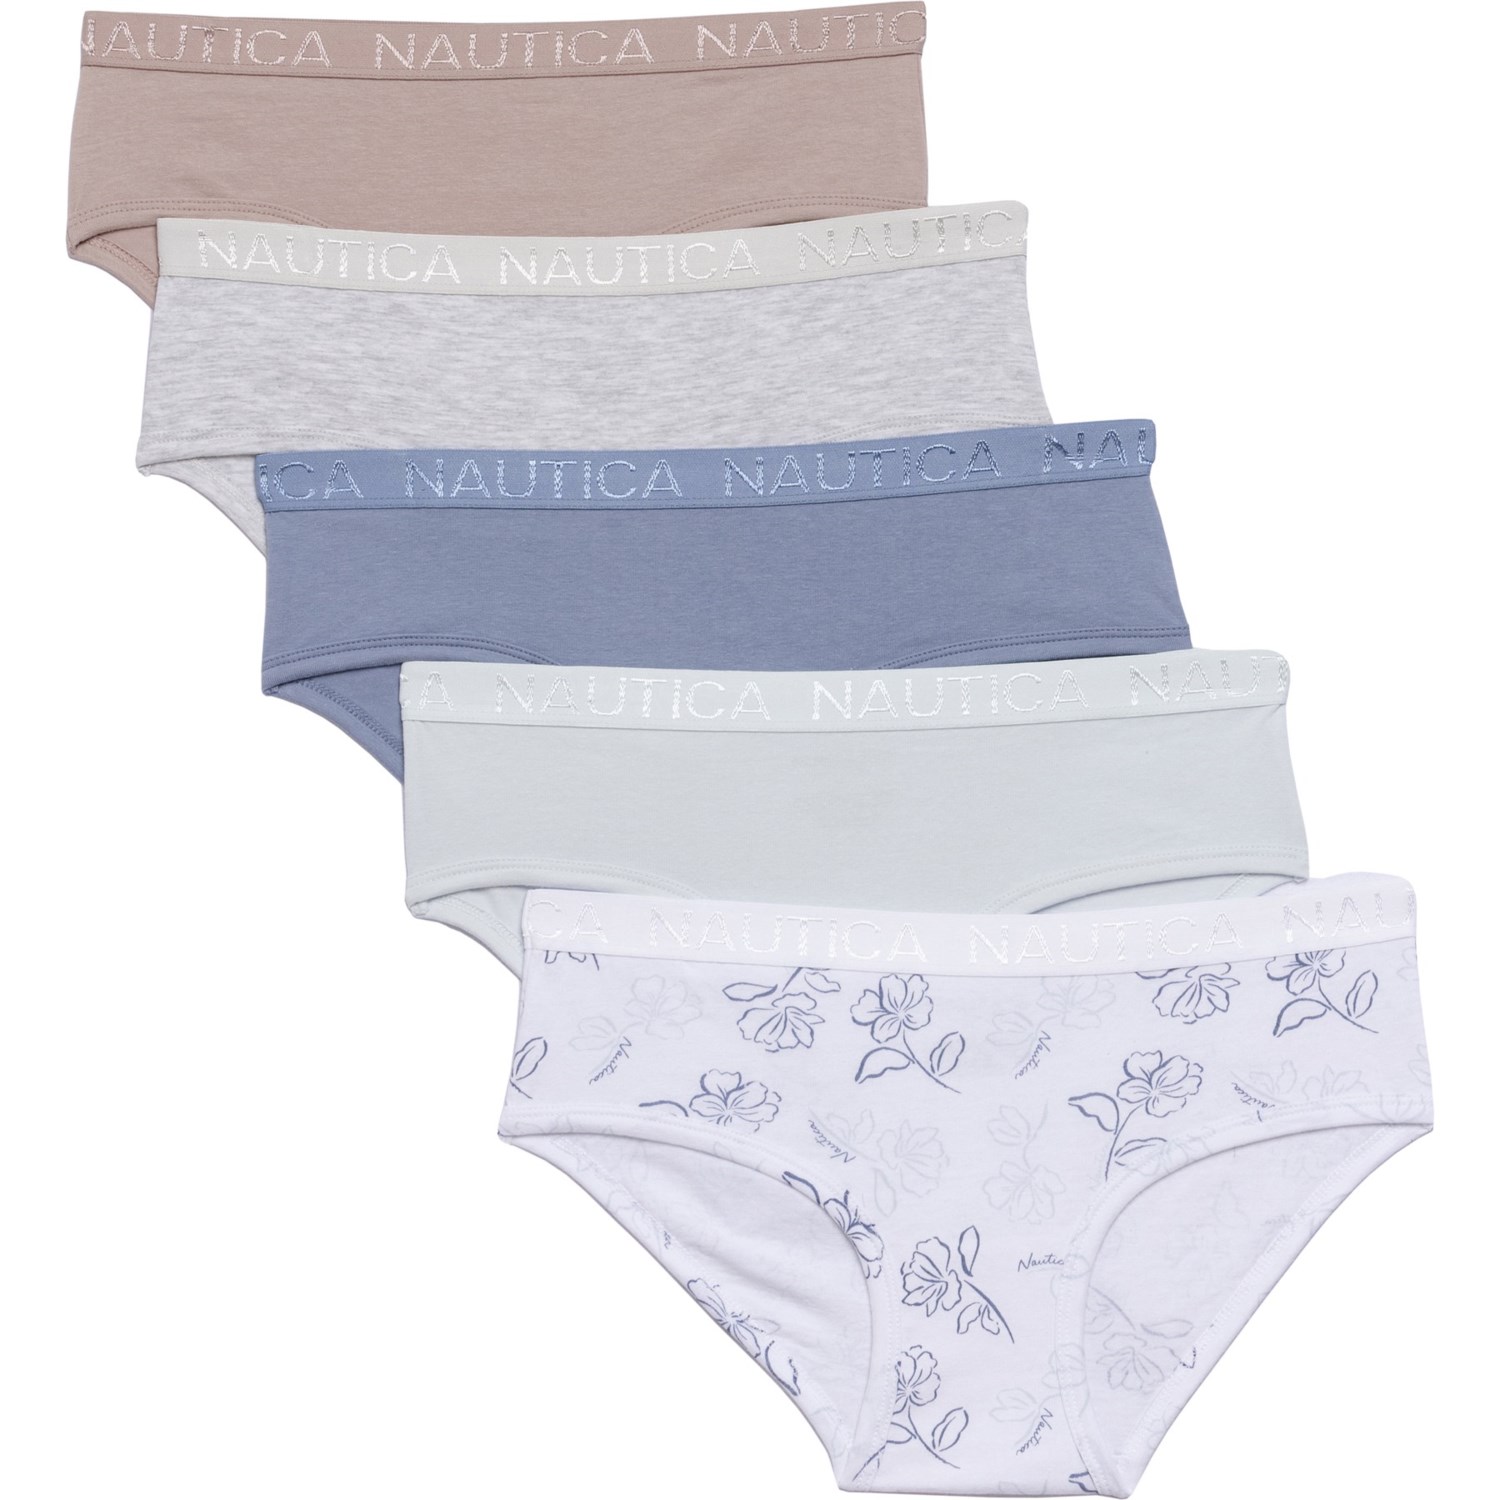 Nautica Organic Cotton Panties - 5-Pack, Hipster